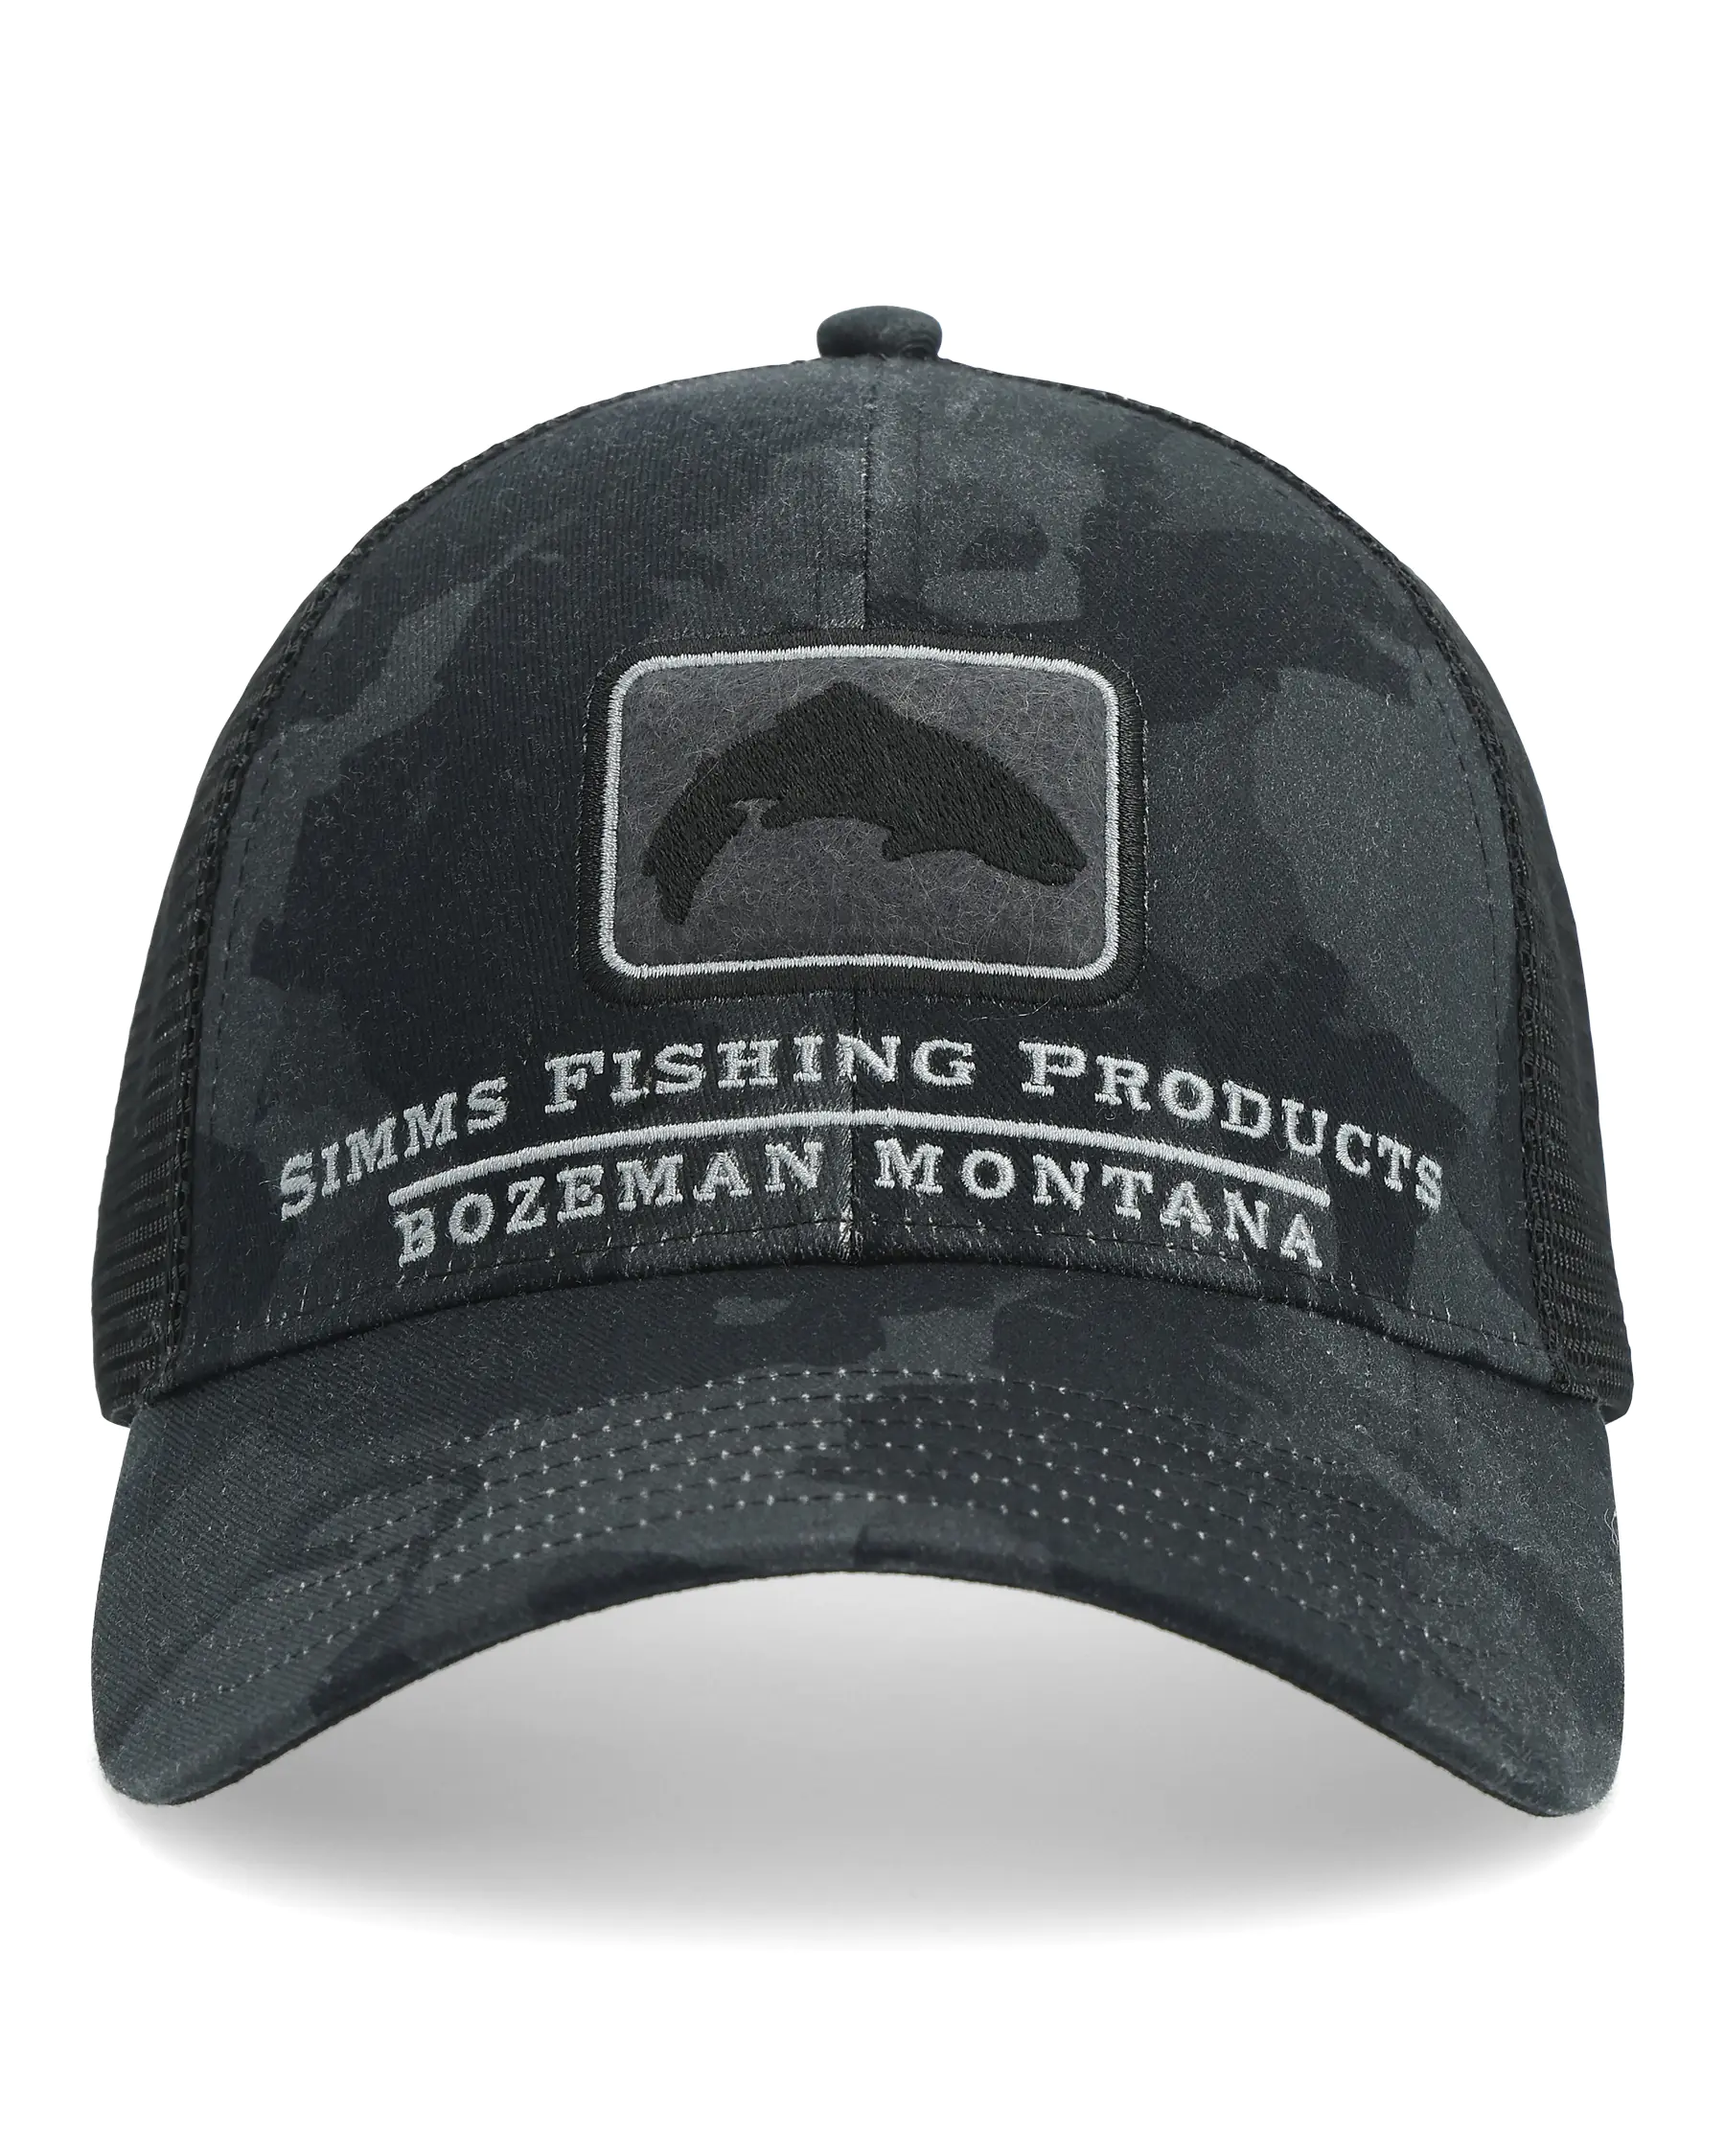 Simms Fishing Products Snapback Trucker Hat Gray 